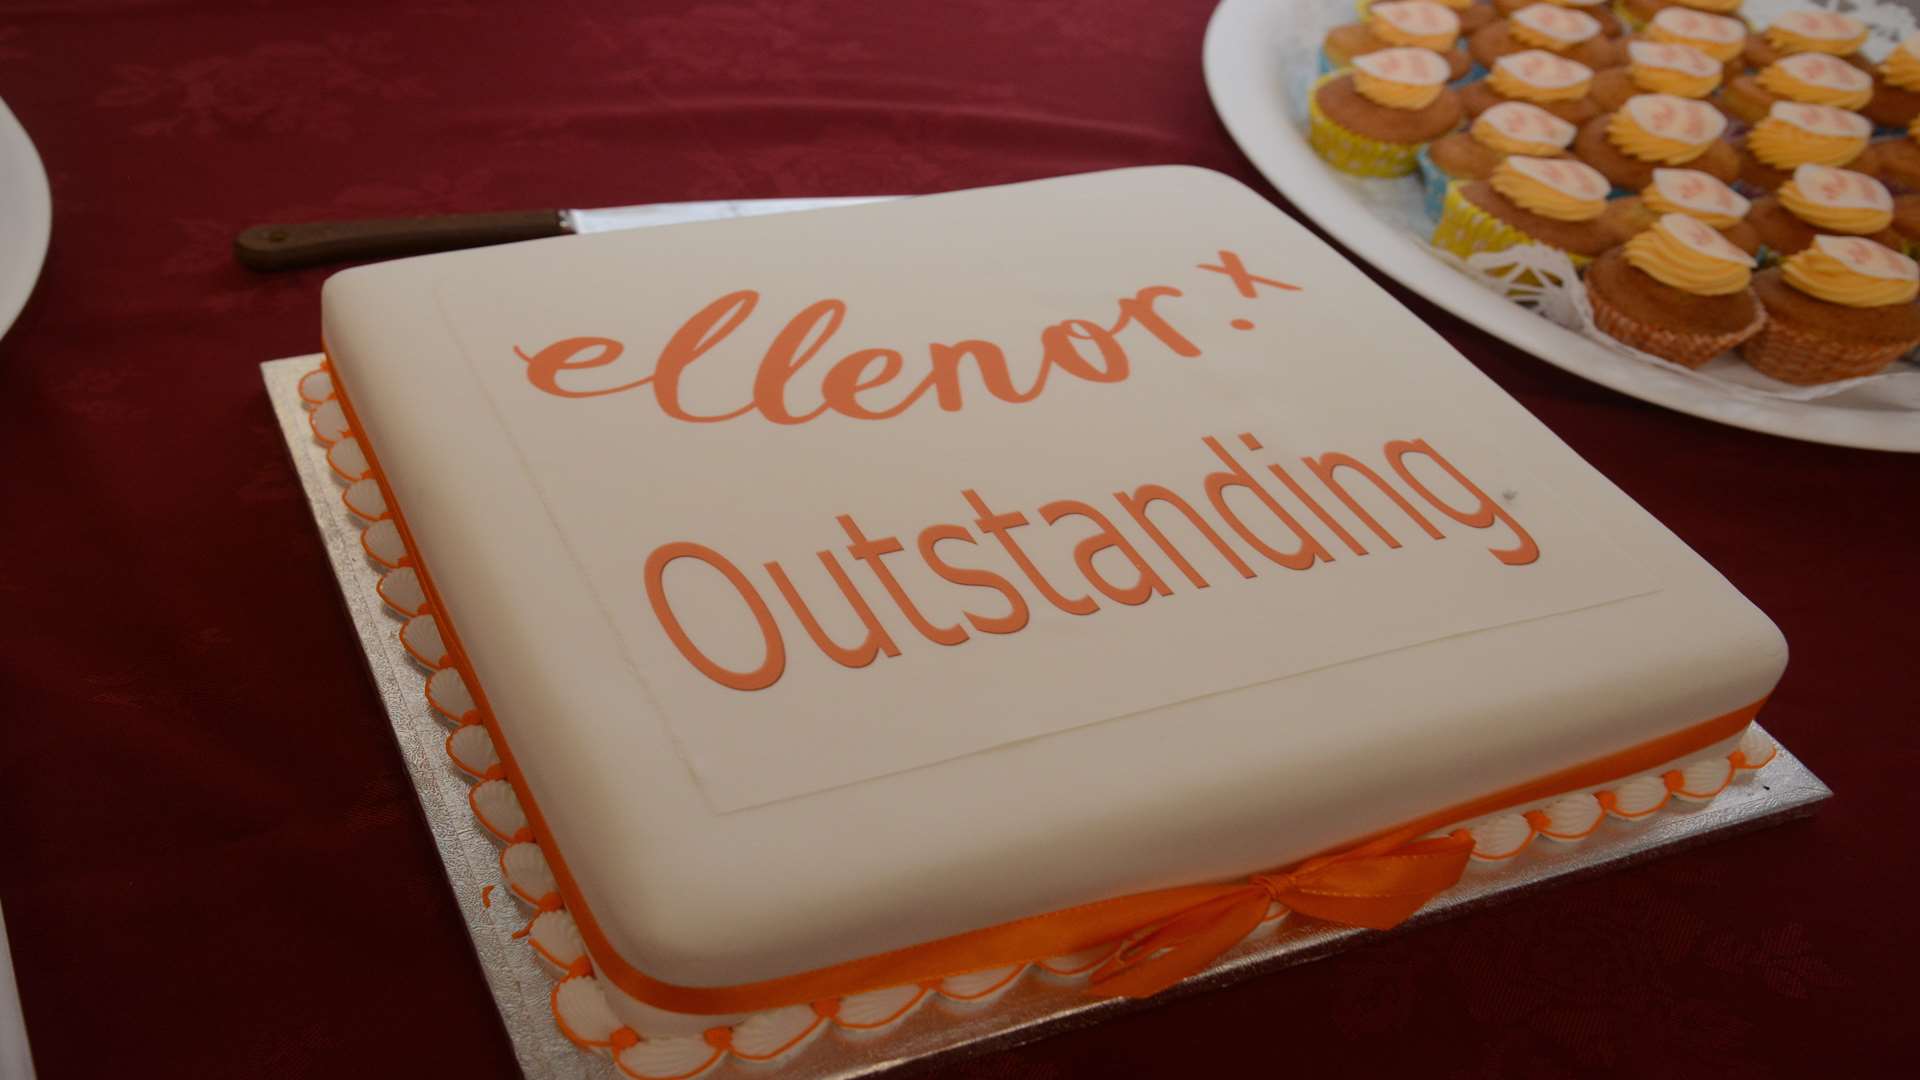 Ellenor hospice celebrated the rating last week